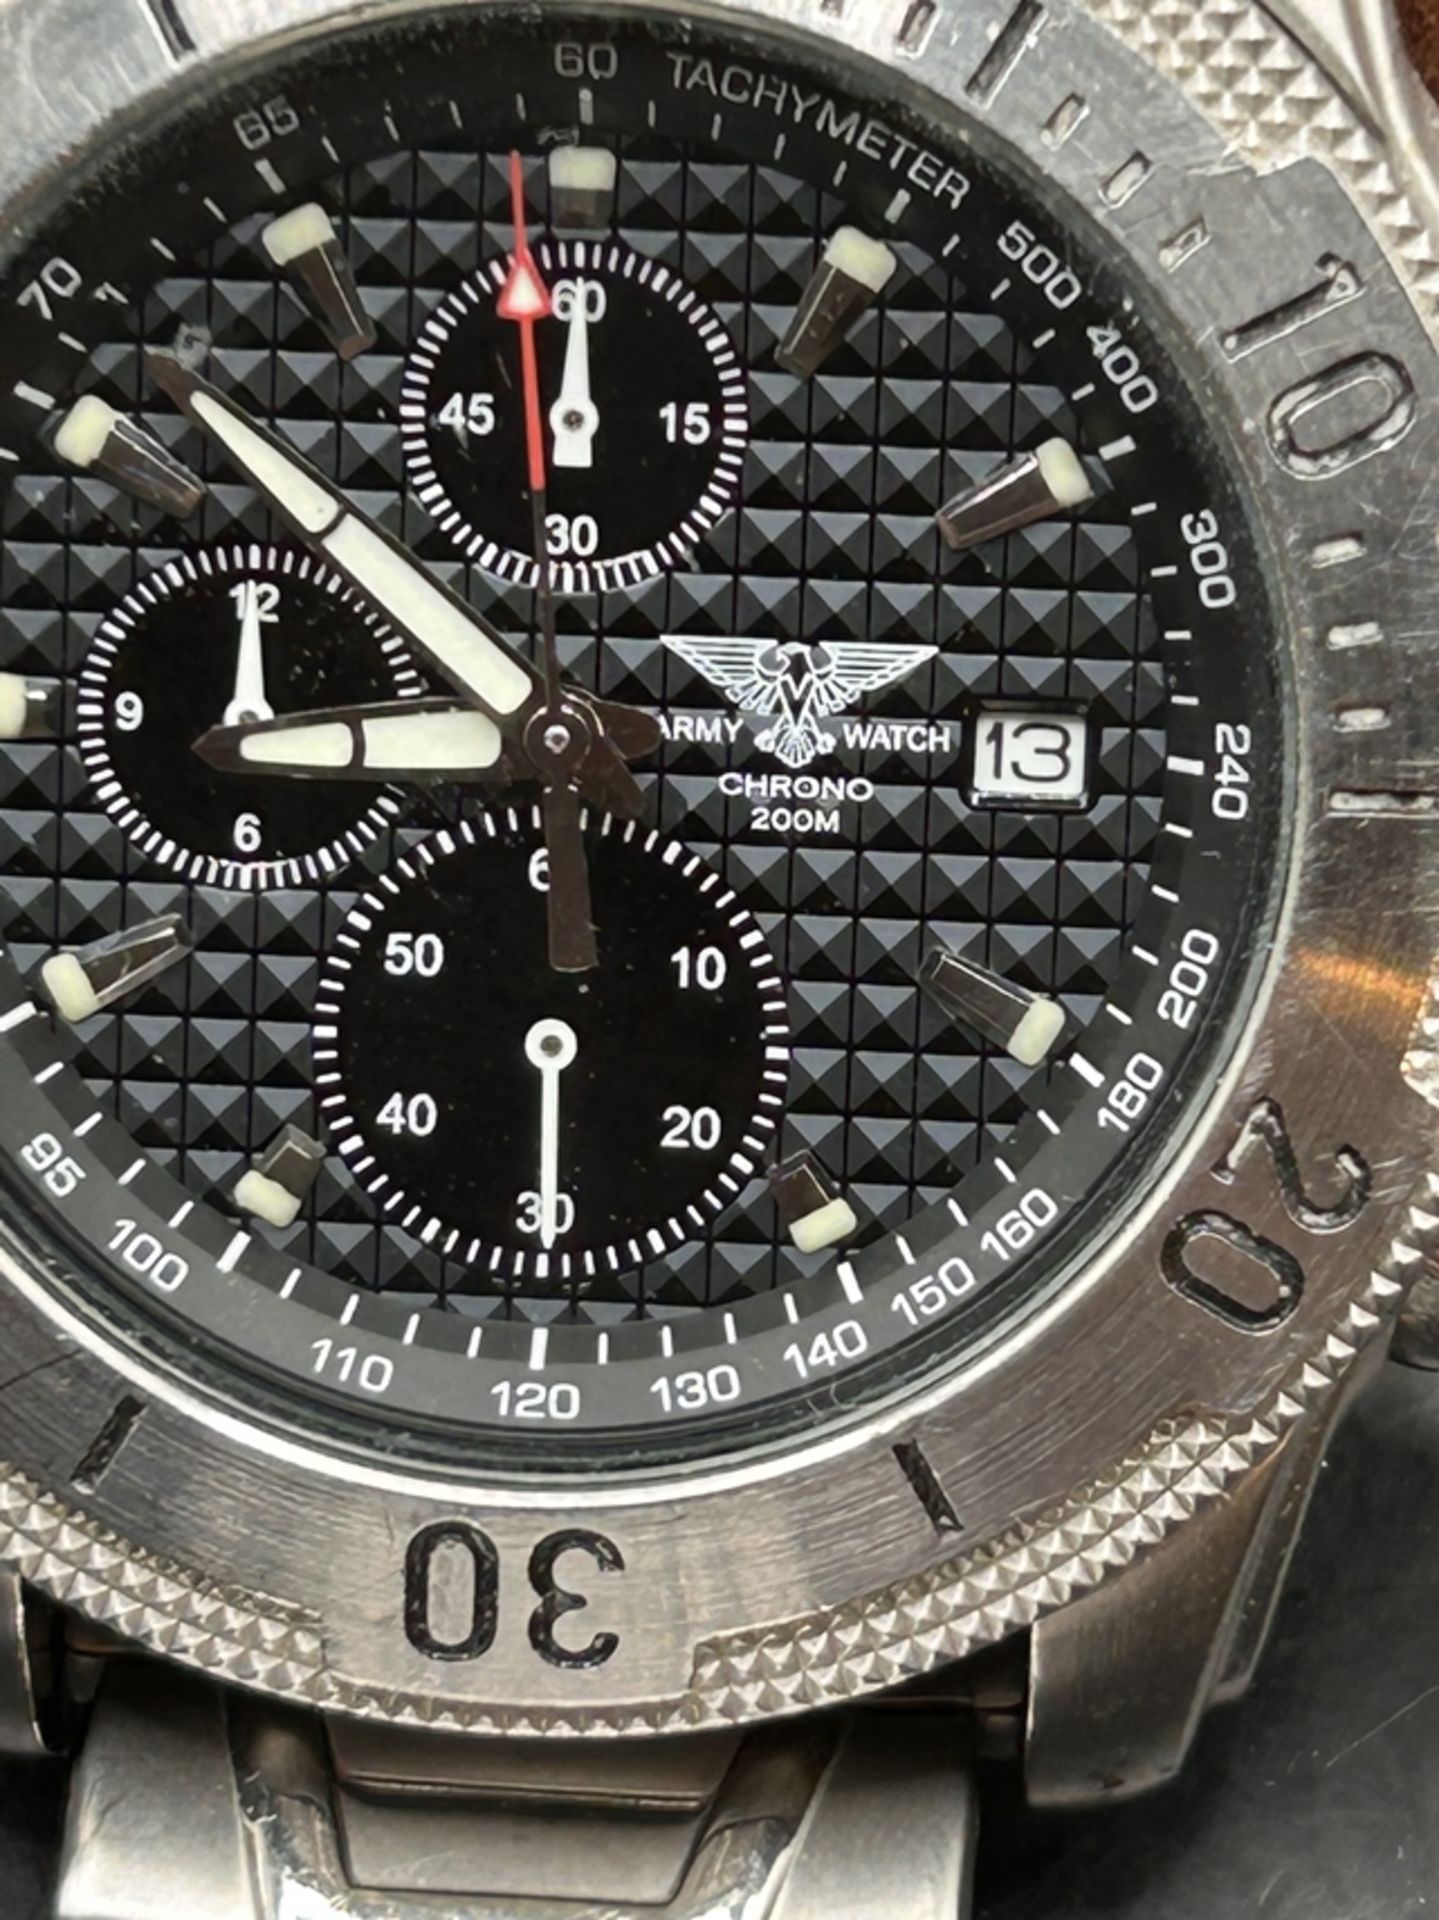 Army watch chrono, 200 m, Stahlband, Nr. 59050075, nicht überprüft - Image 3 of 4